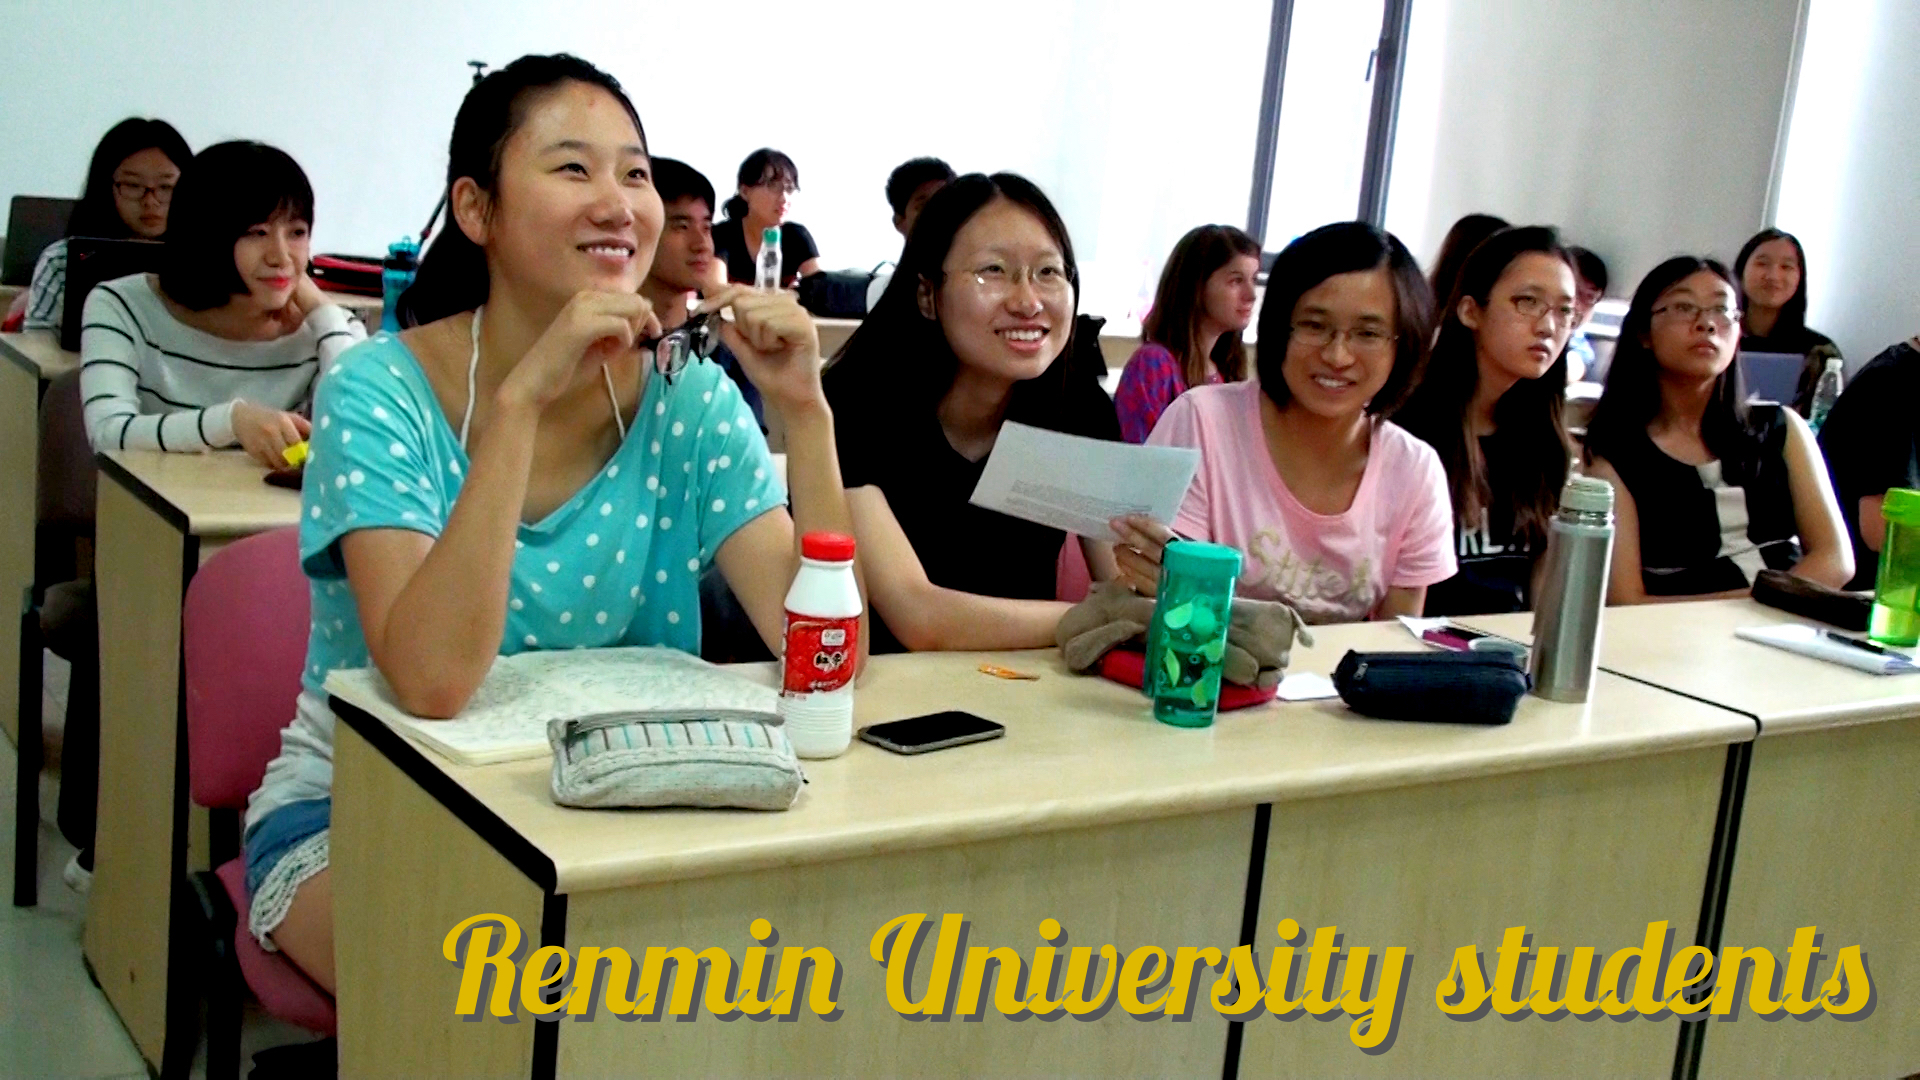 Renmin University students.jpg